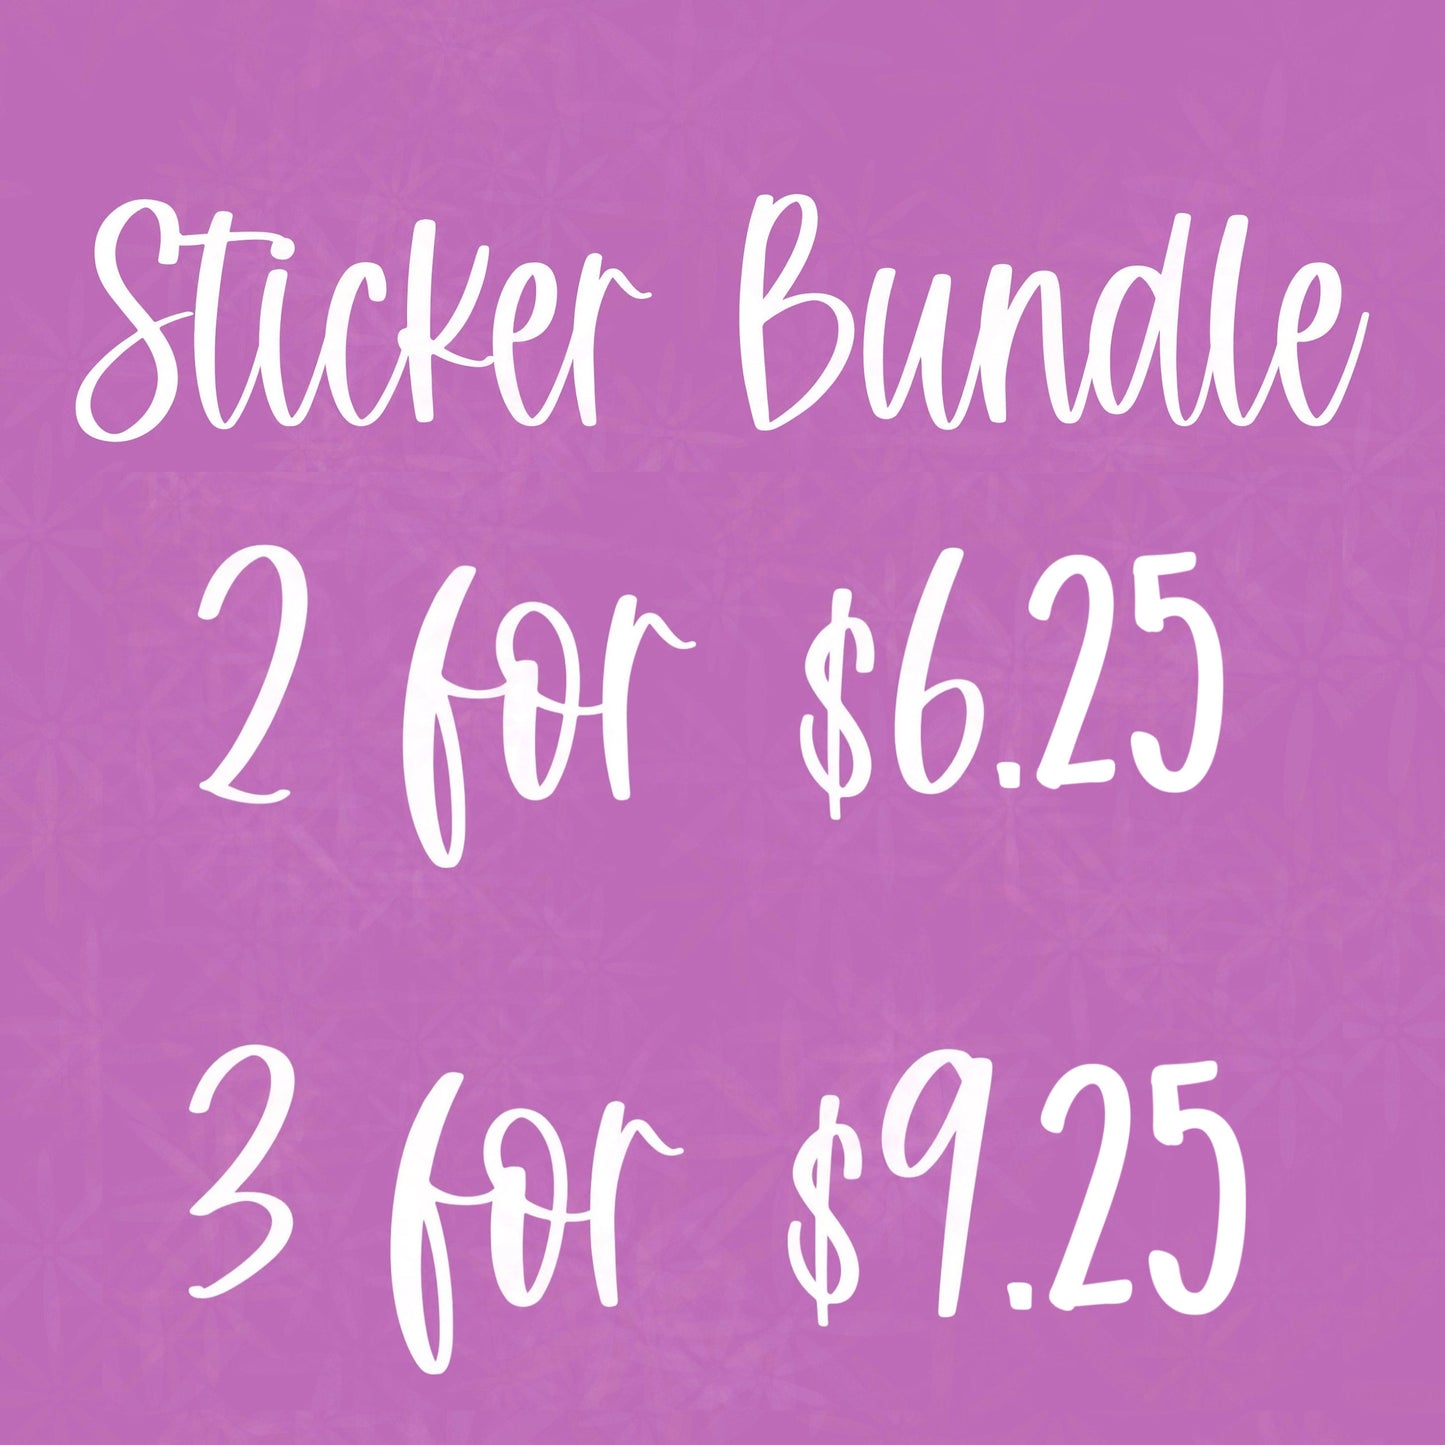 STICKER BUNDLE - Sticker Pack, Choose 2 or 3